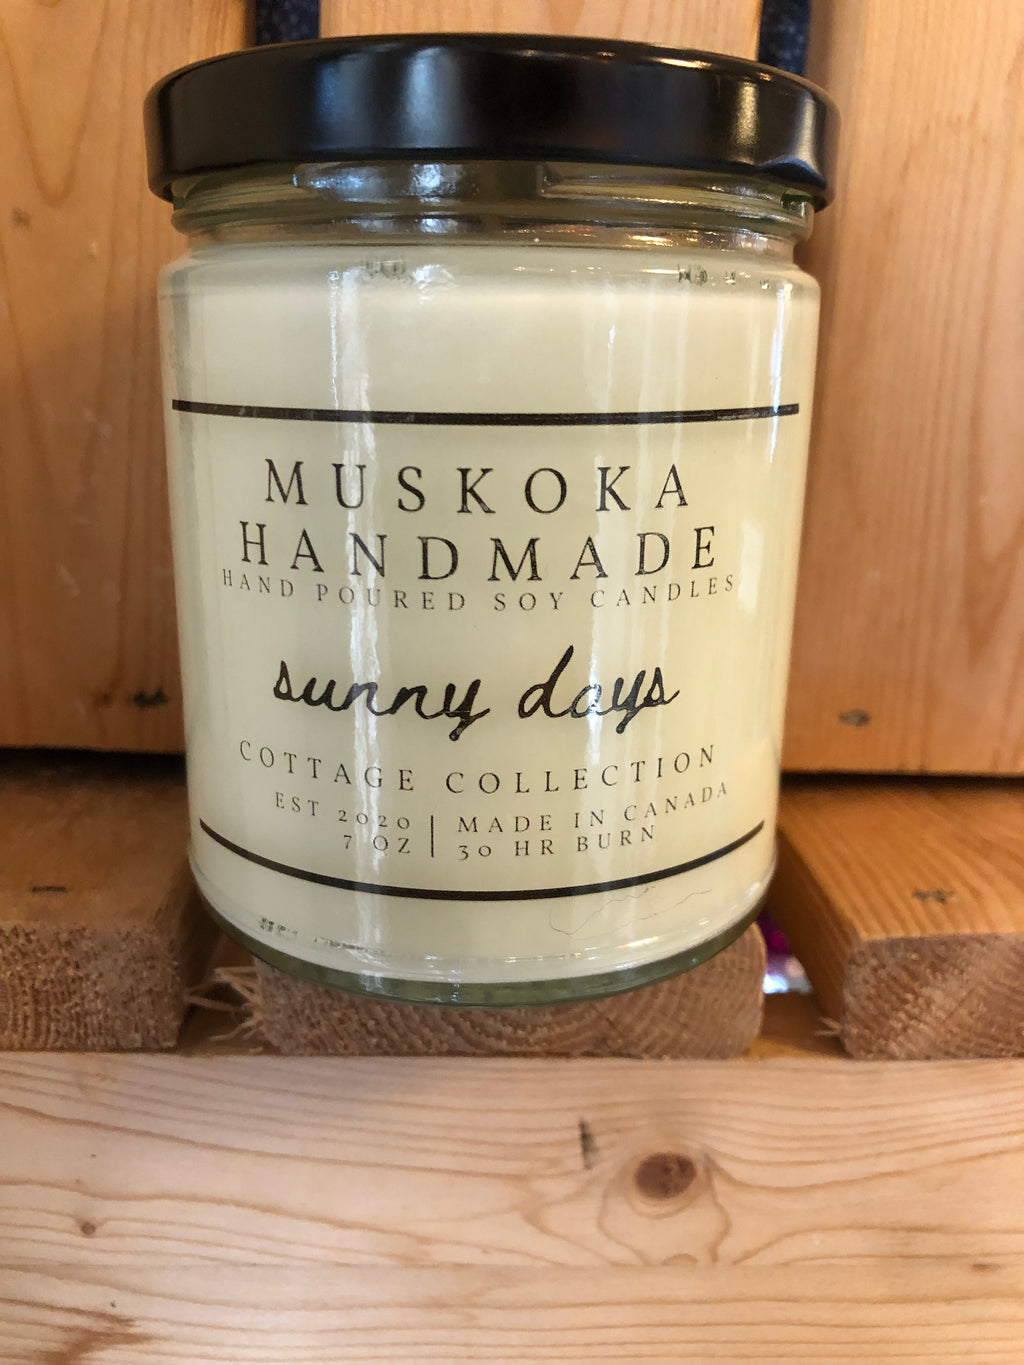 Muskoka Handmade Sunny Days Candle